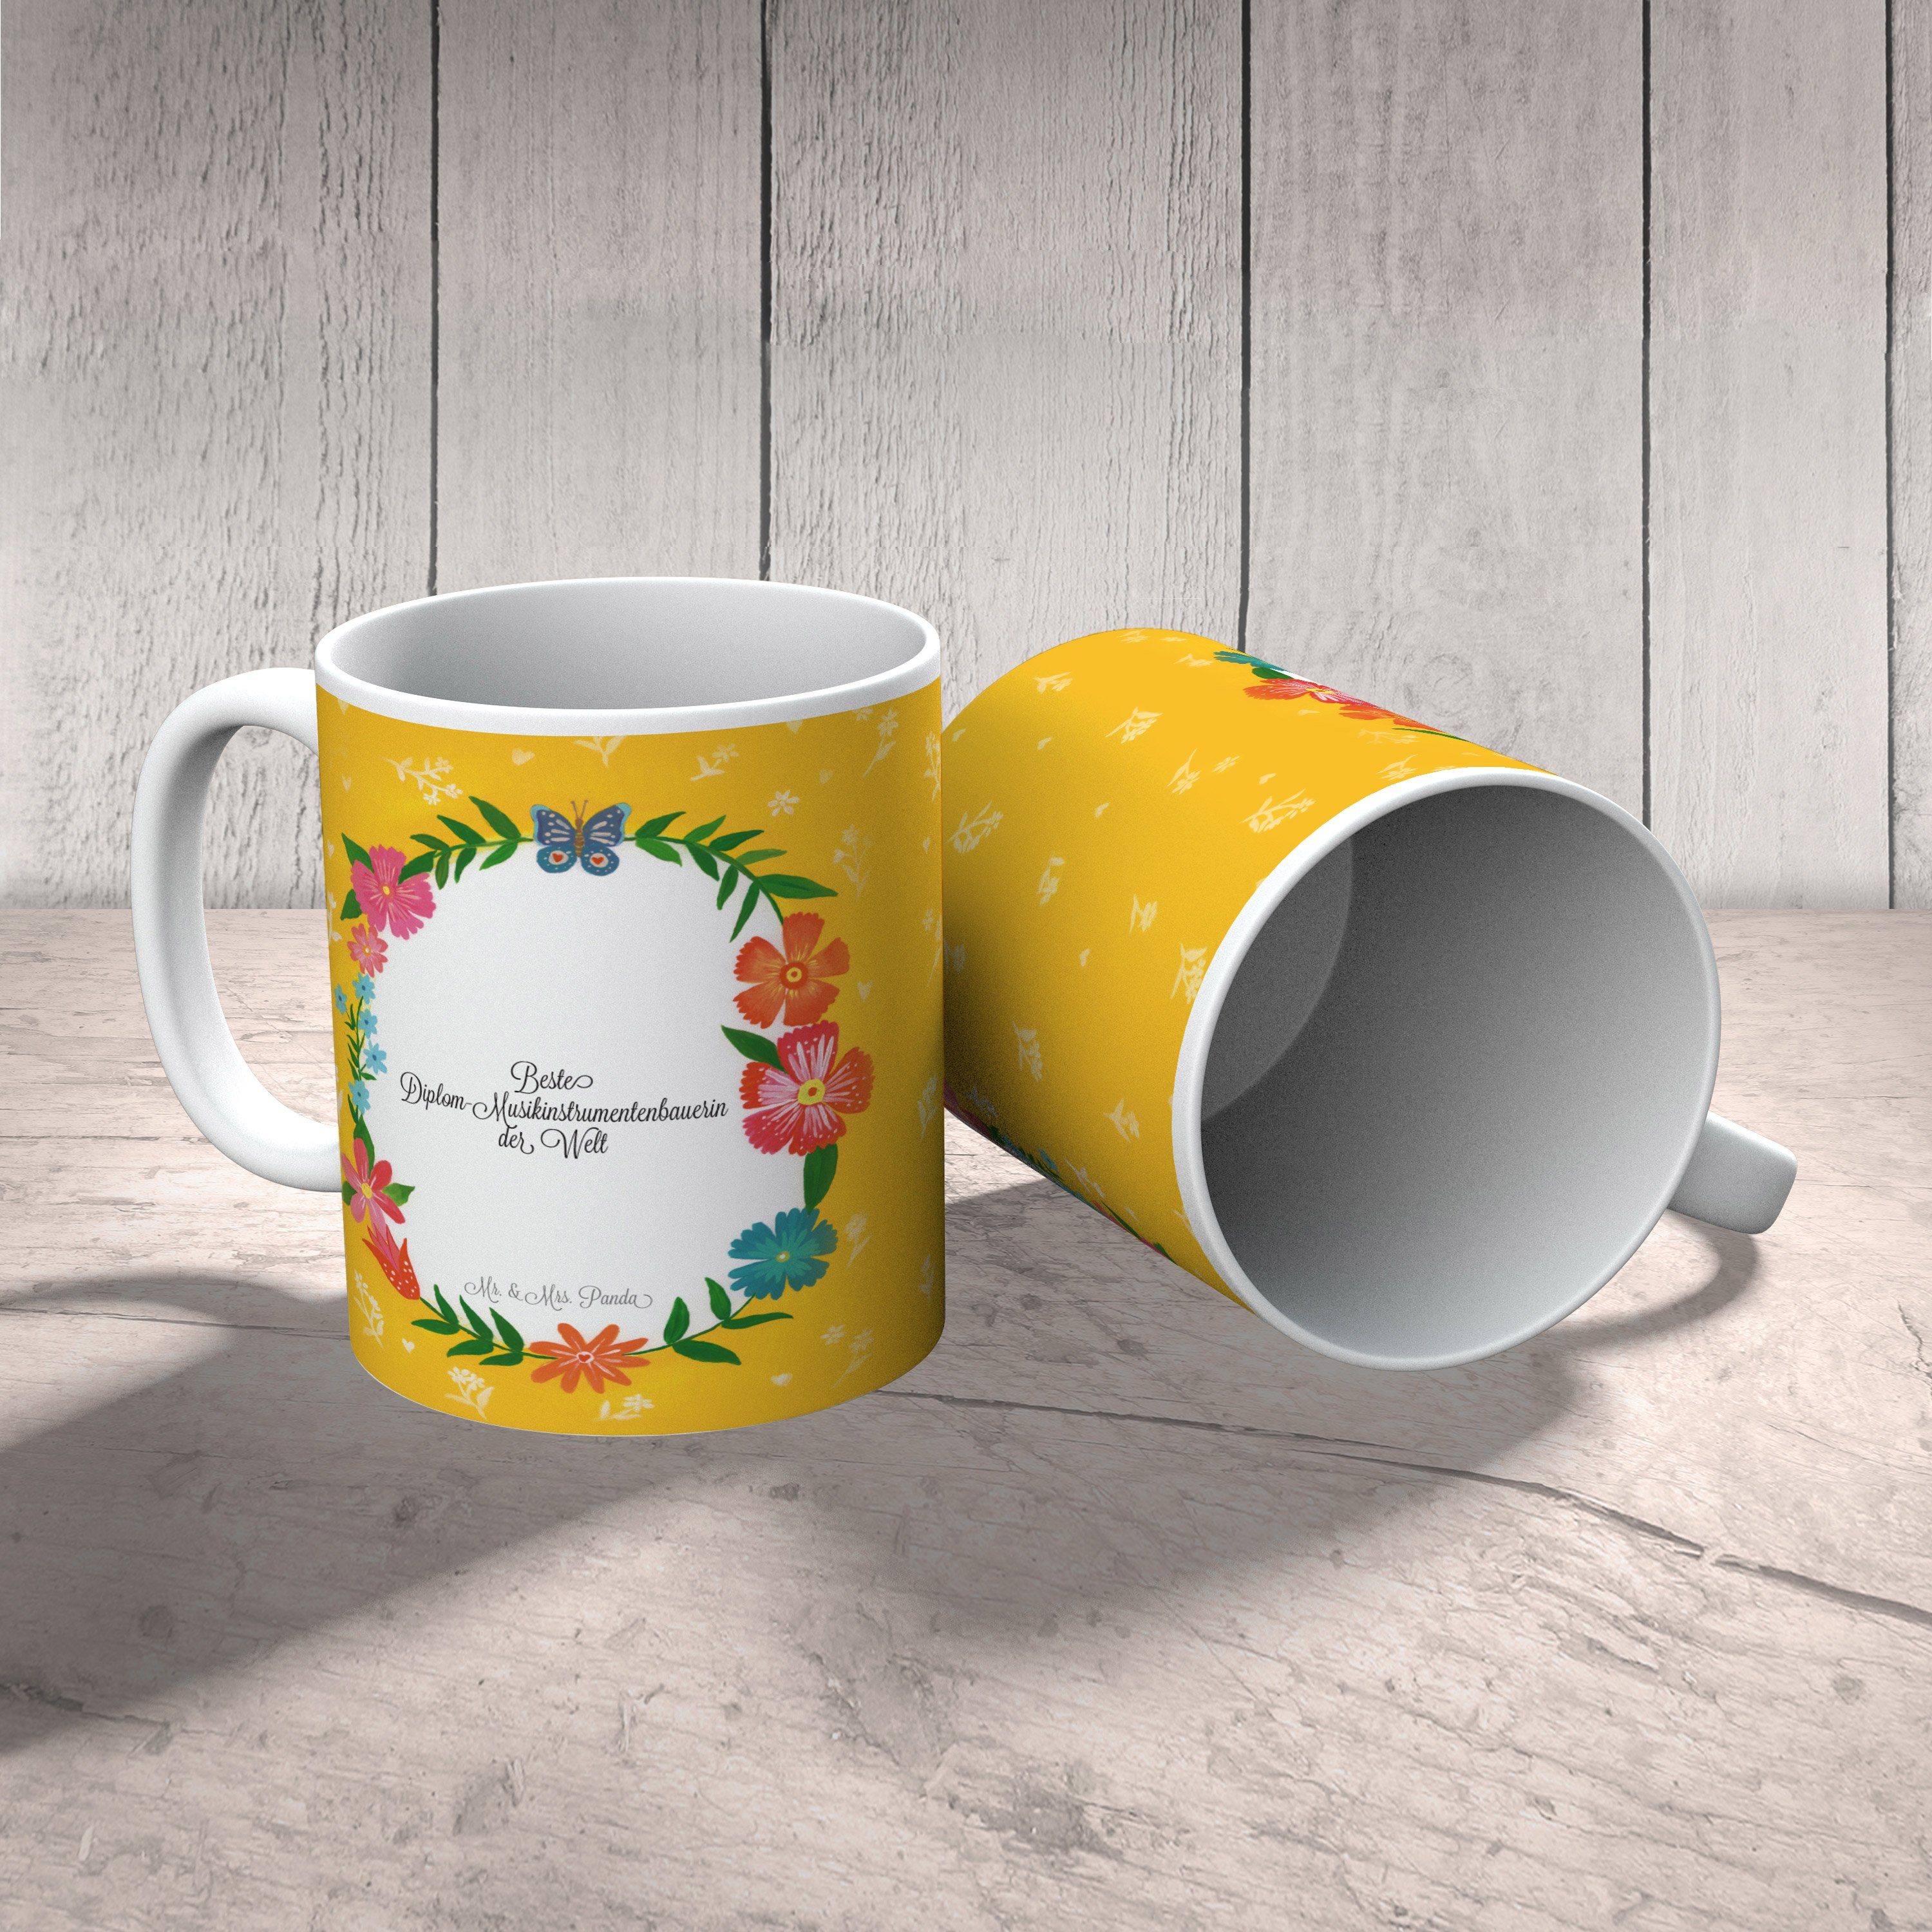 Mr. & Mrs. Panda Tasse Motive, Geschenk, Diplom-Musikinstrumentenbauerin Keramik Tasse - Kaffeetasse